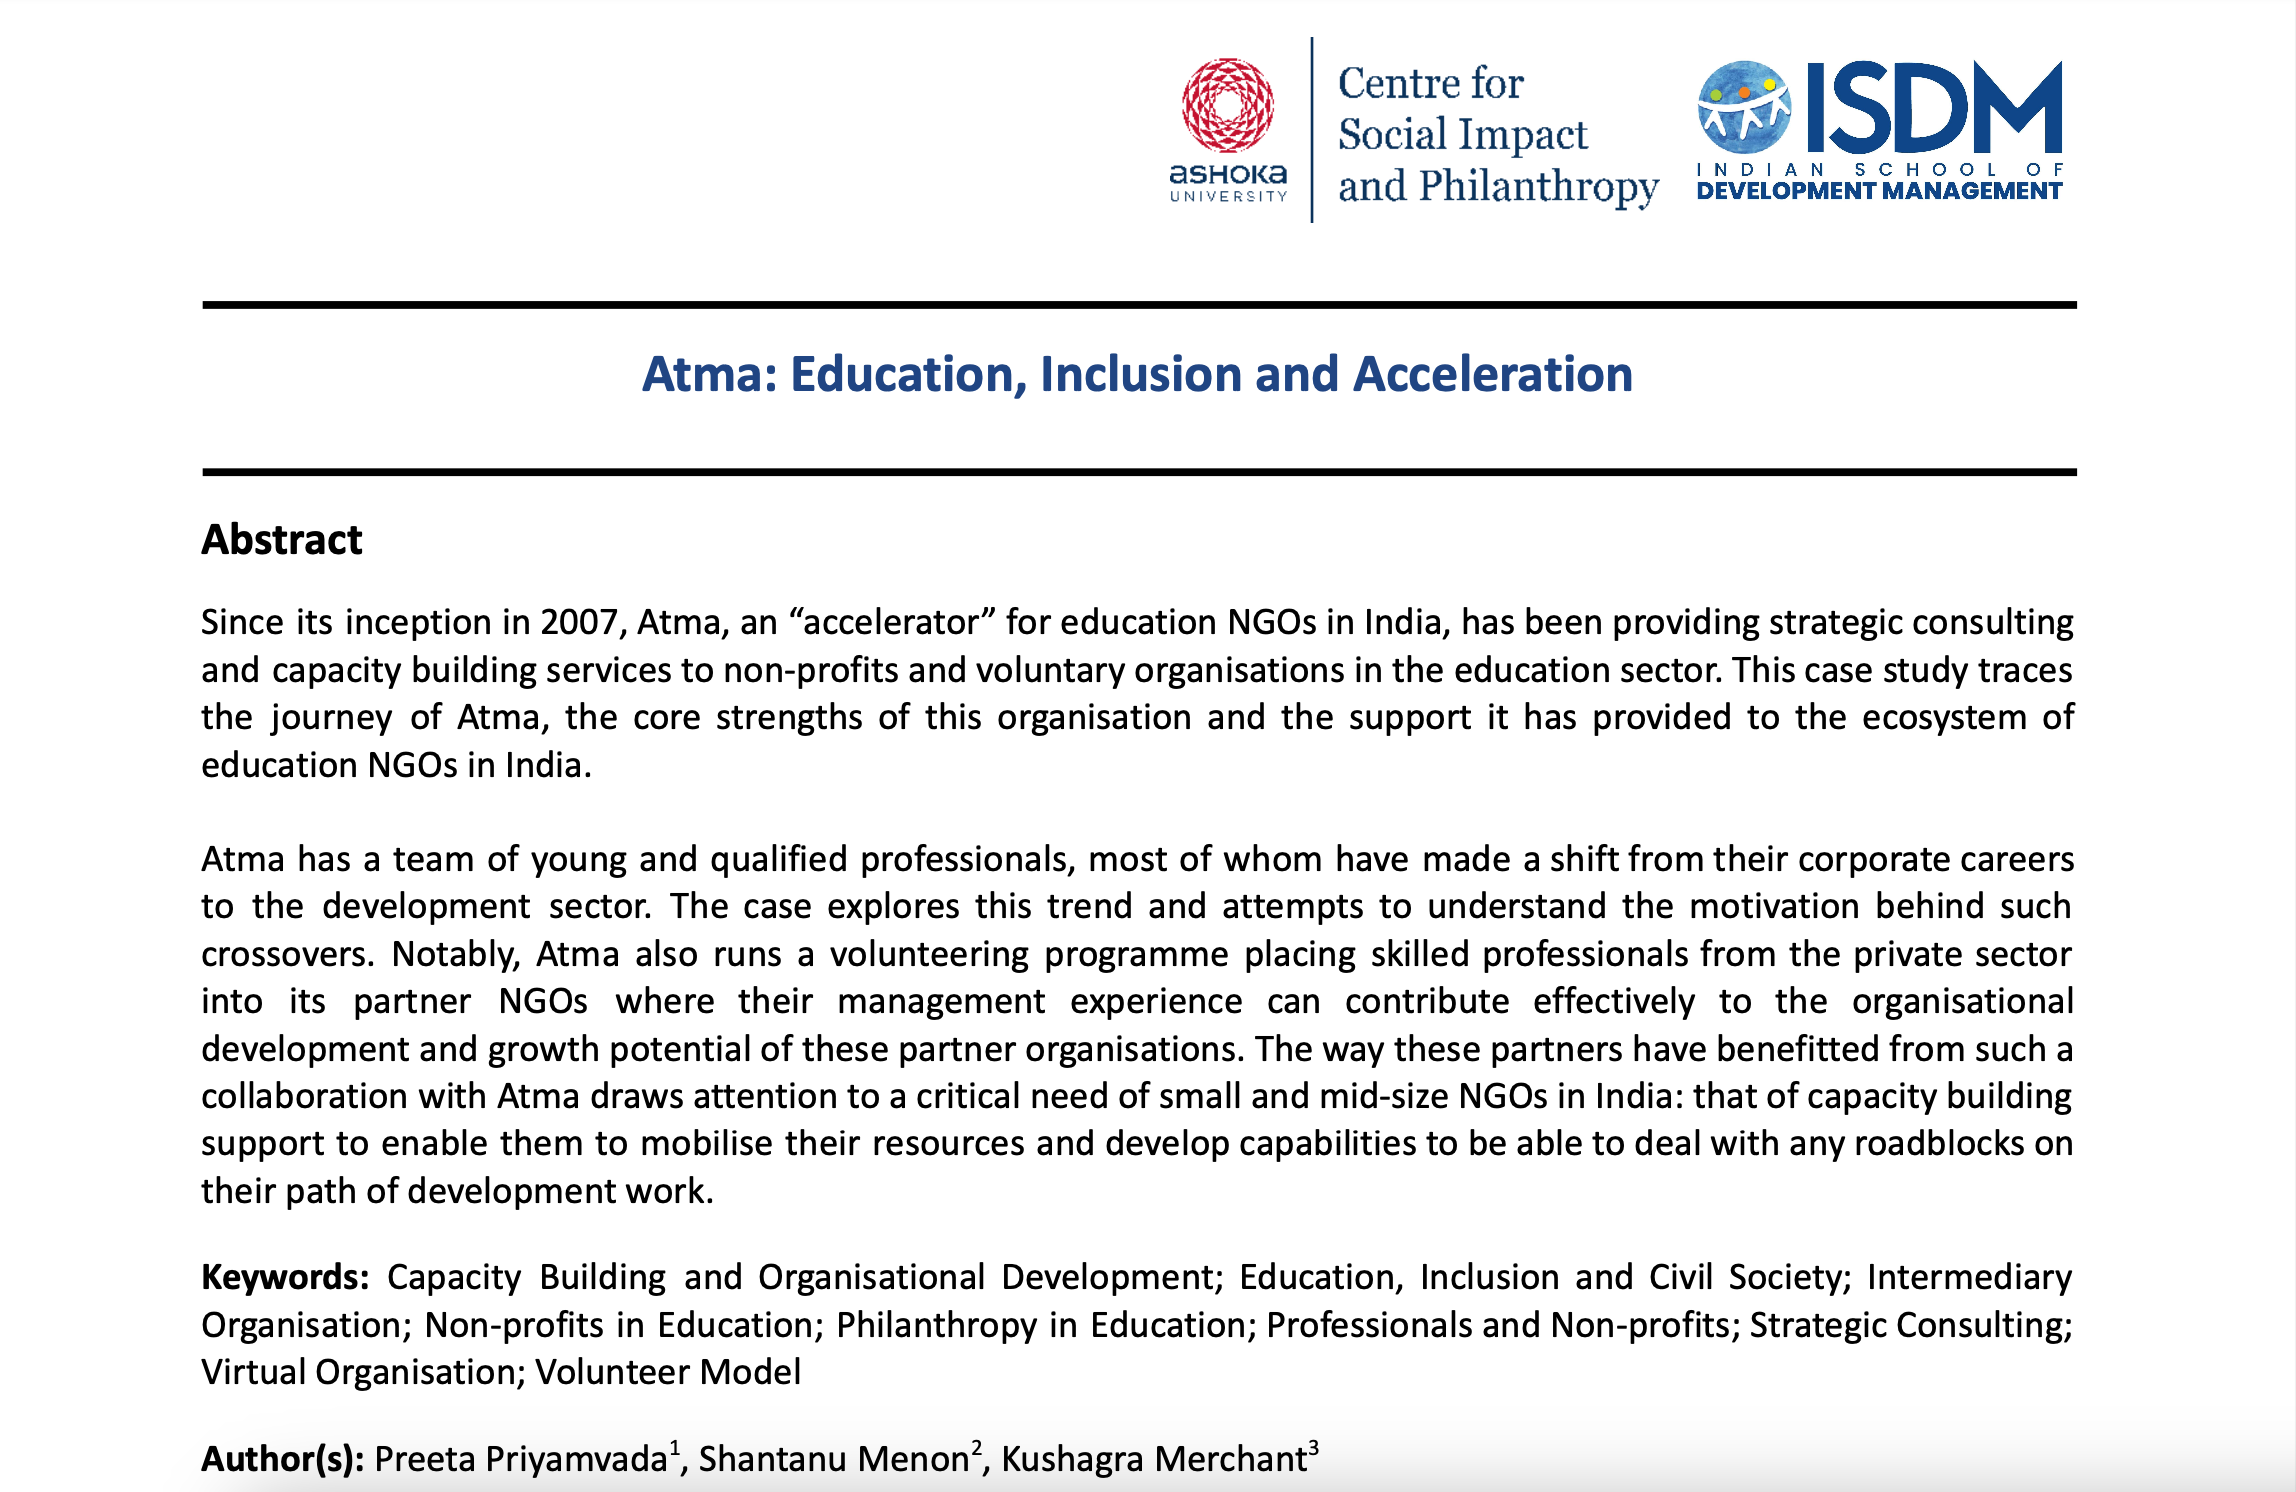 Atma: Education, Inclusion and Acceleration Image